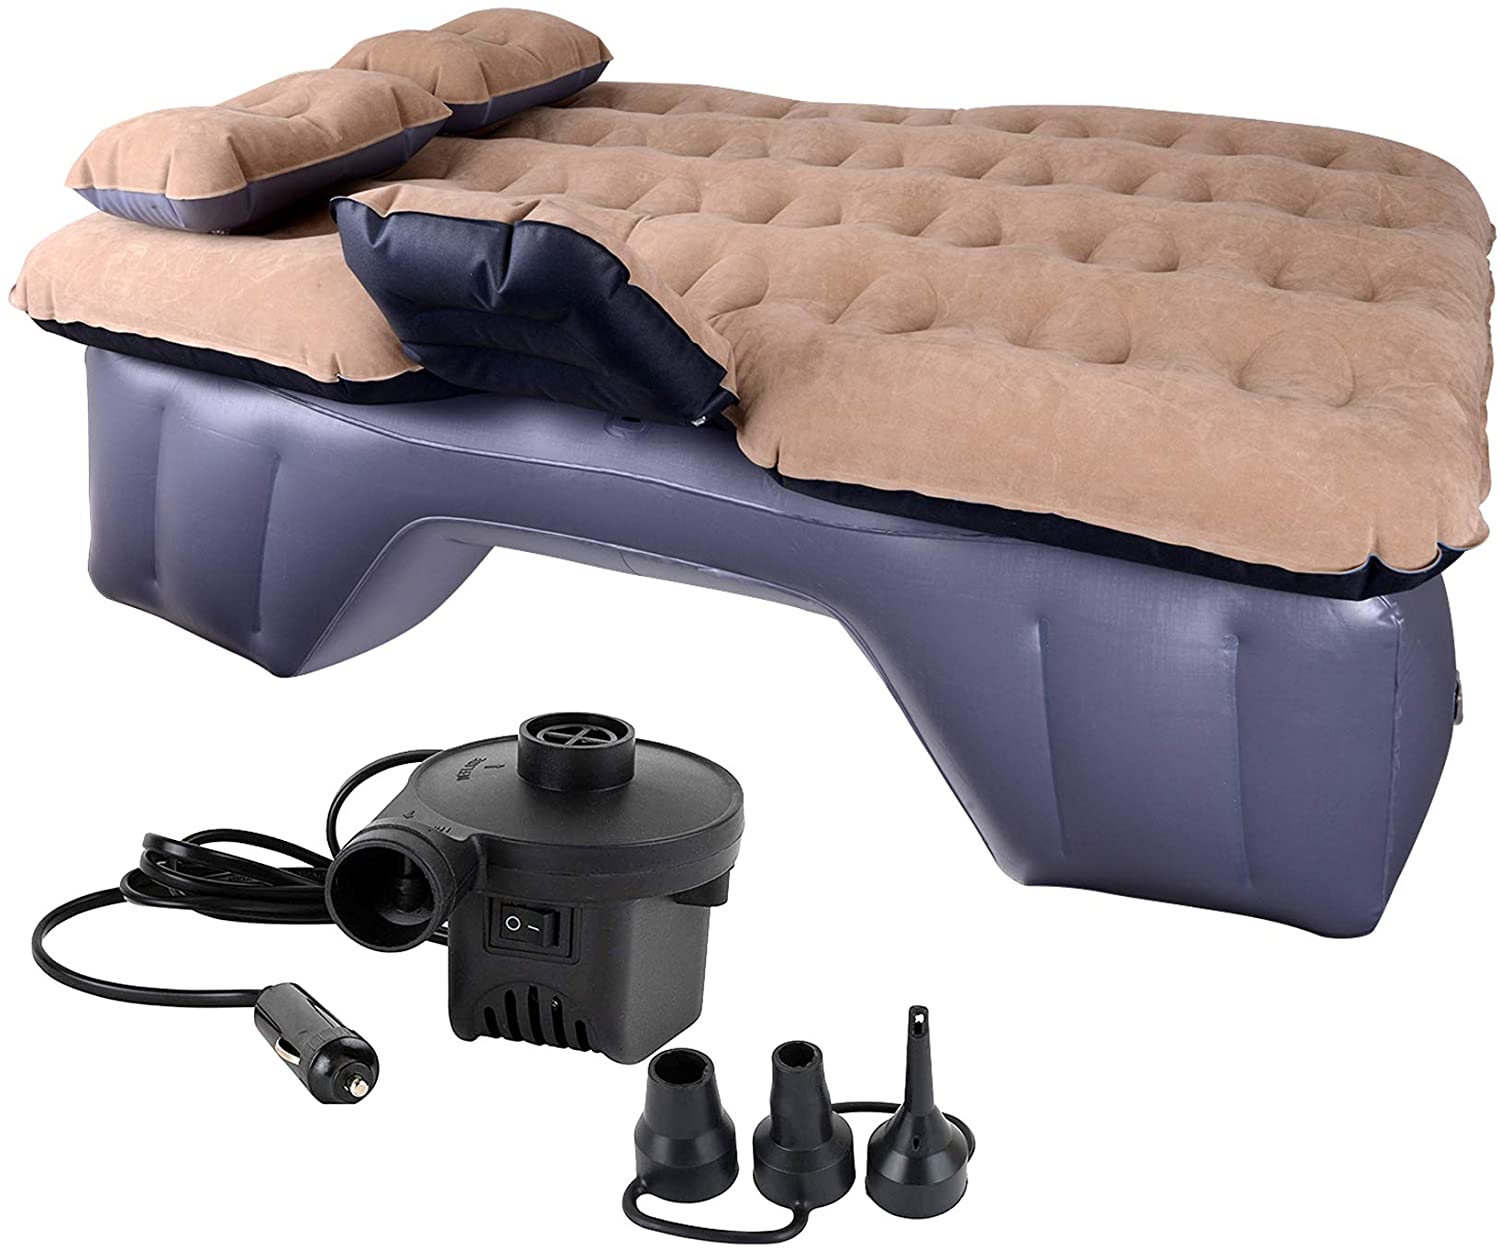 winterial backseat air mattress